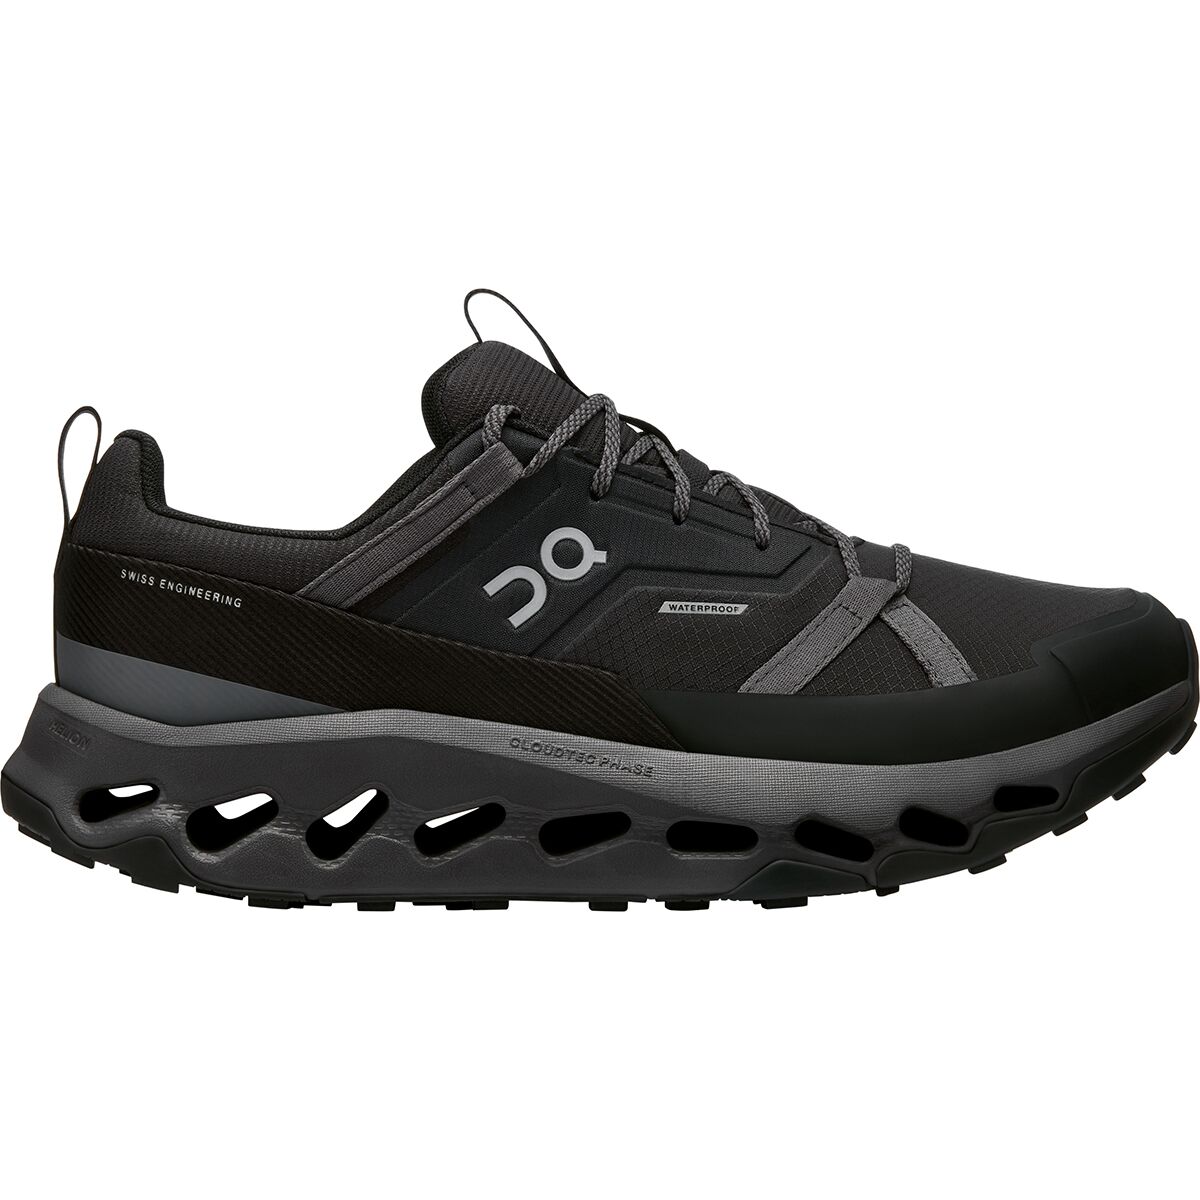 Cloudhorizon Waterproof Shoe - Men